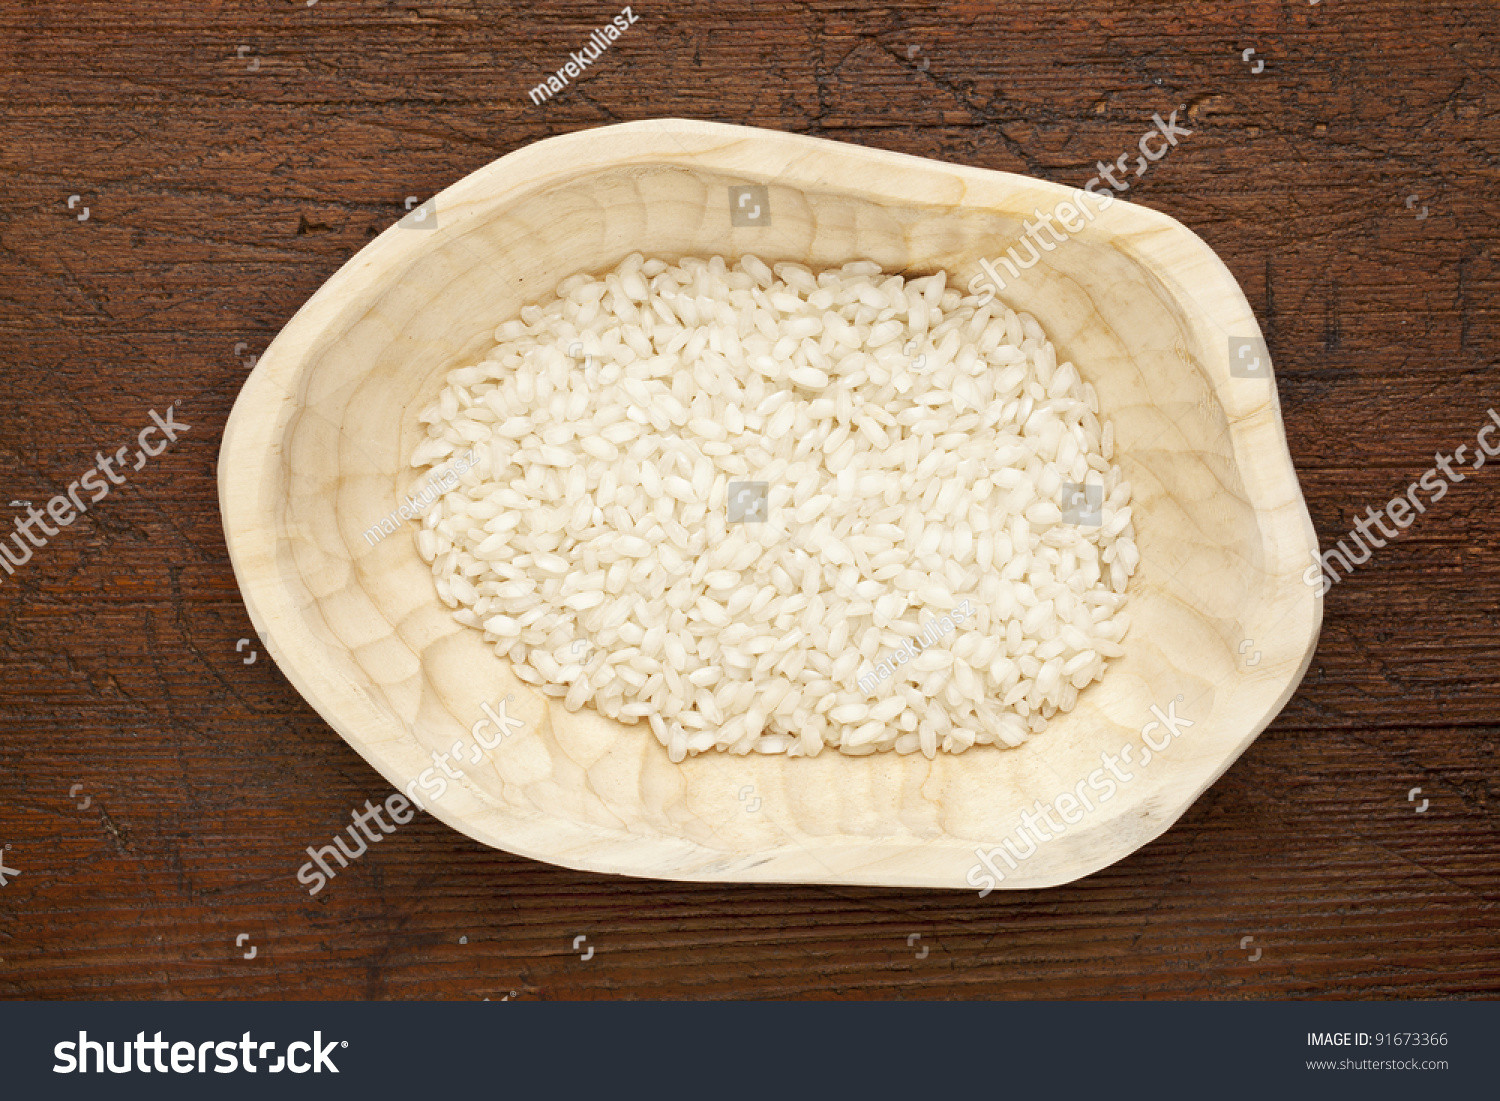 Grain Used In Risotto
 Arborio Rice Grain Used For Traditional Italian Meal